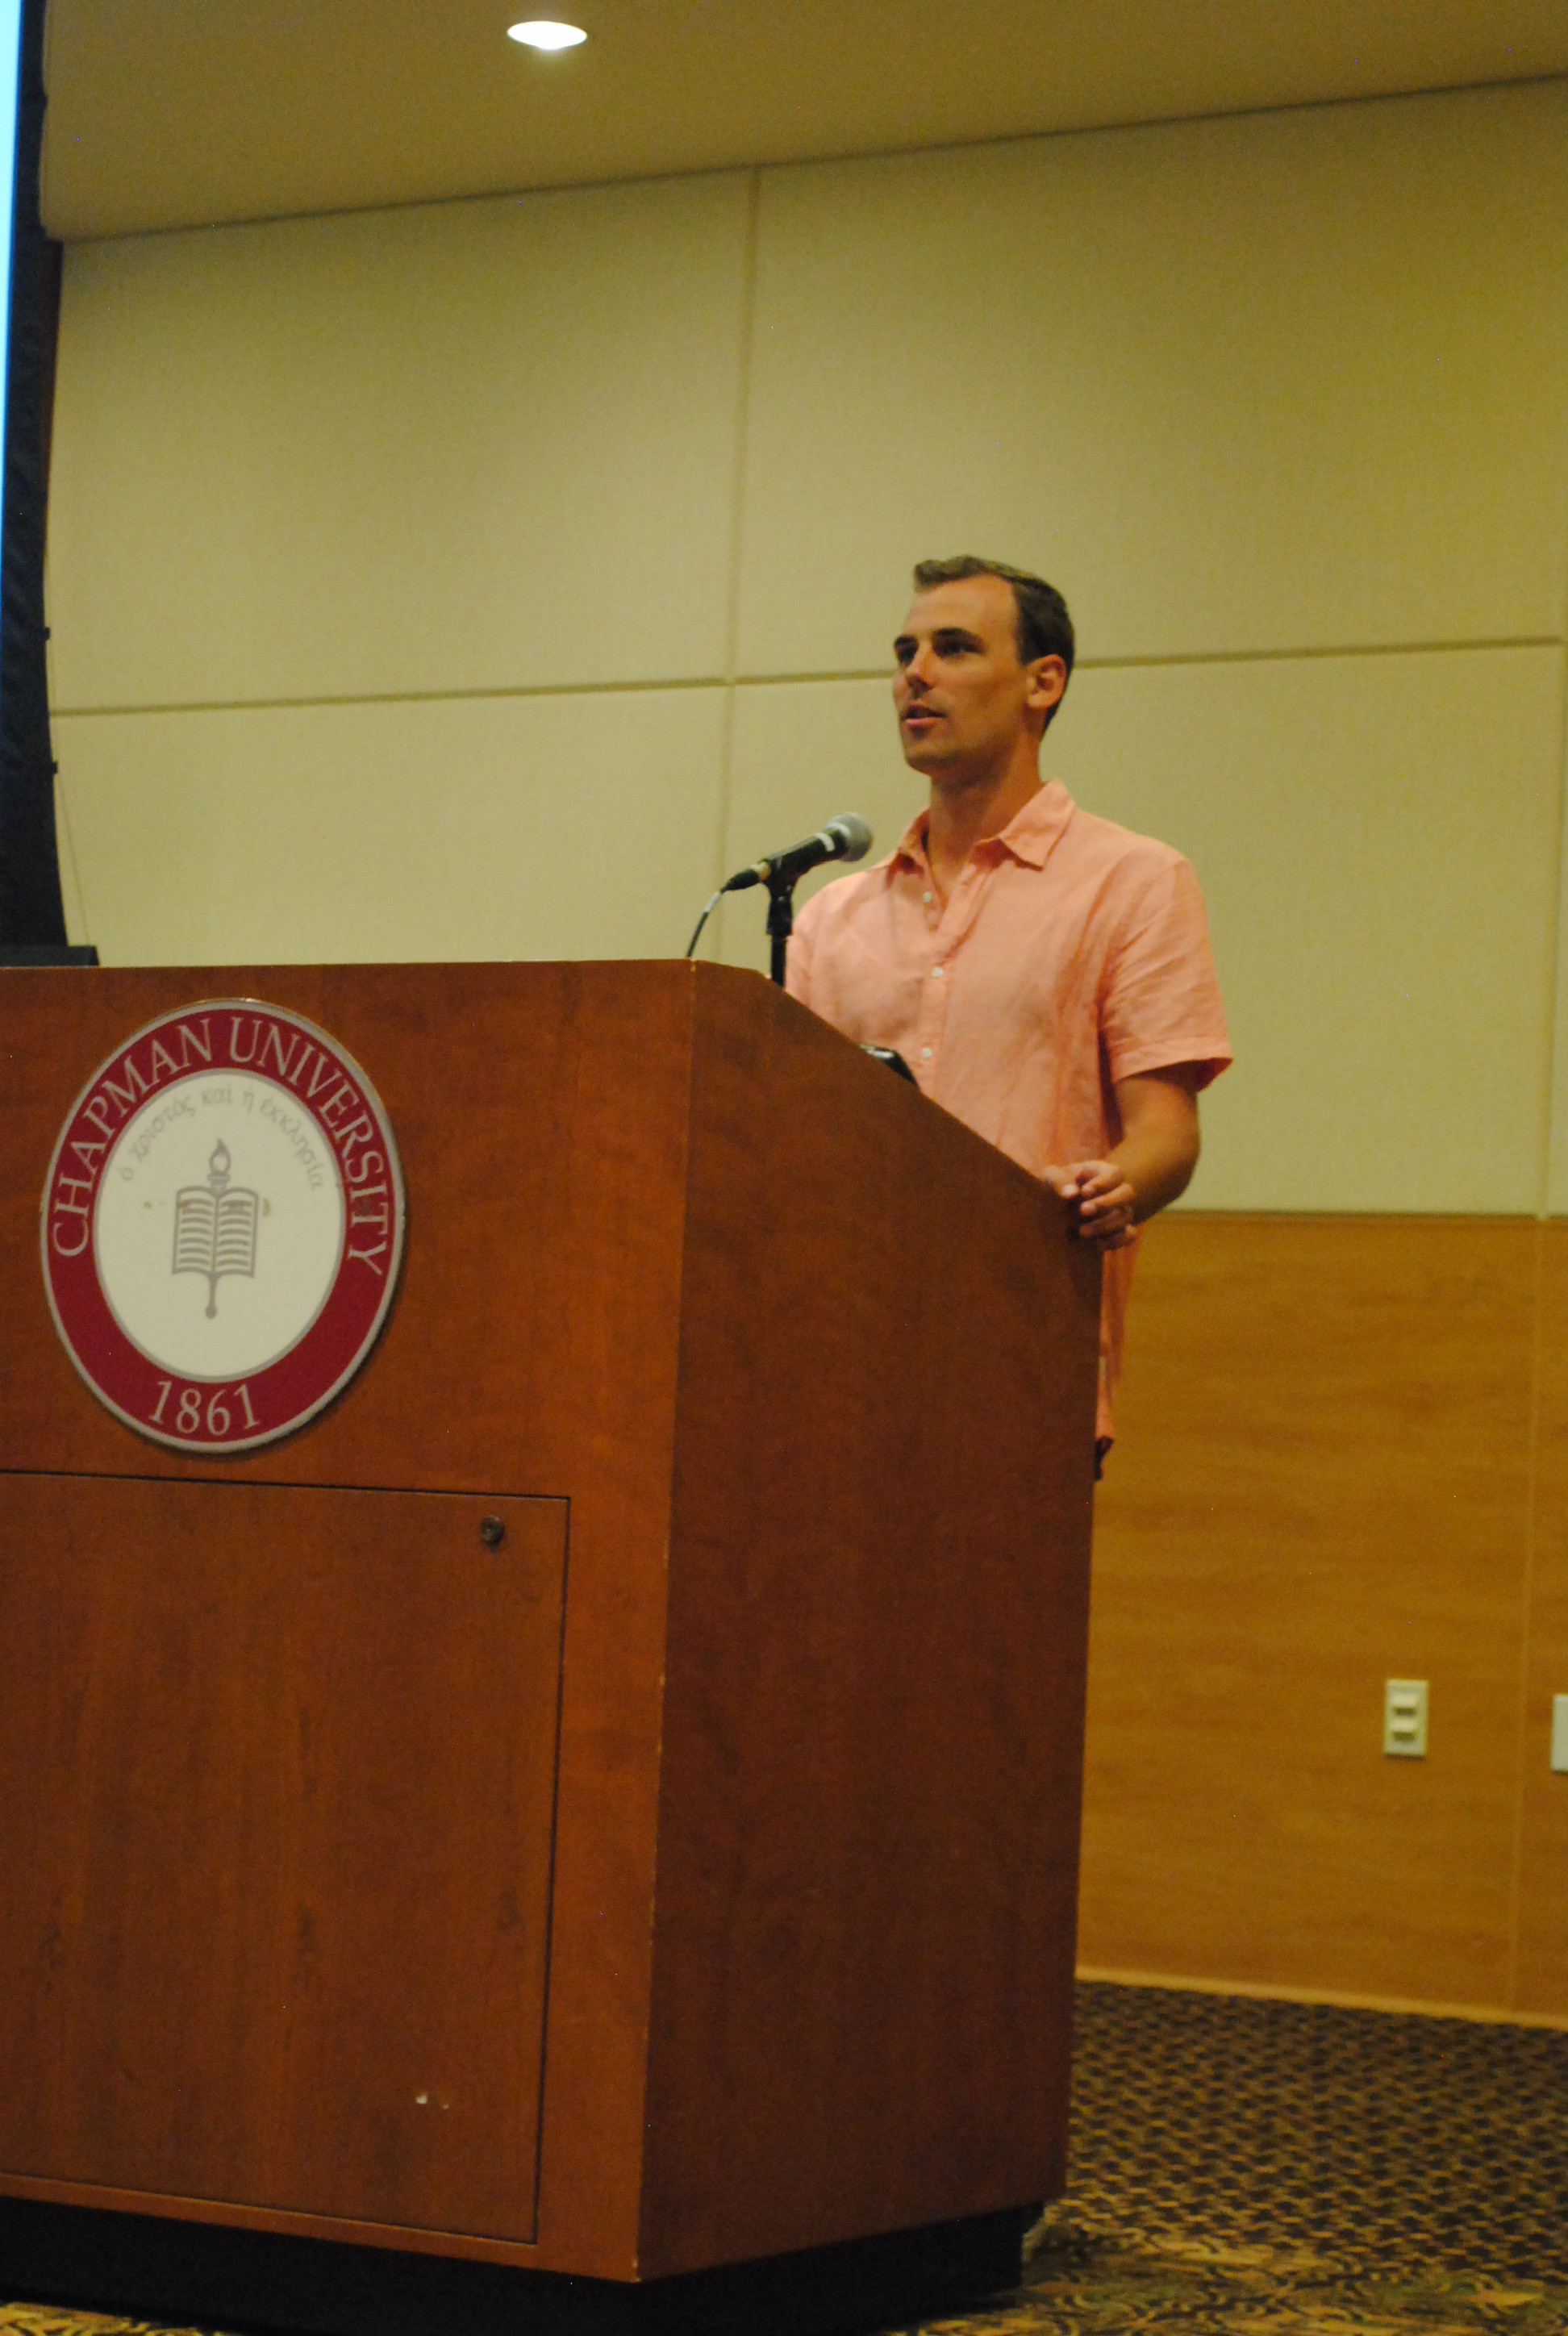 Image: Matt Wheatley speaking at a Chapman University podium.